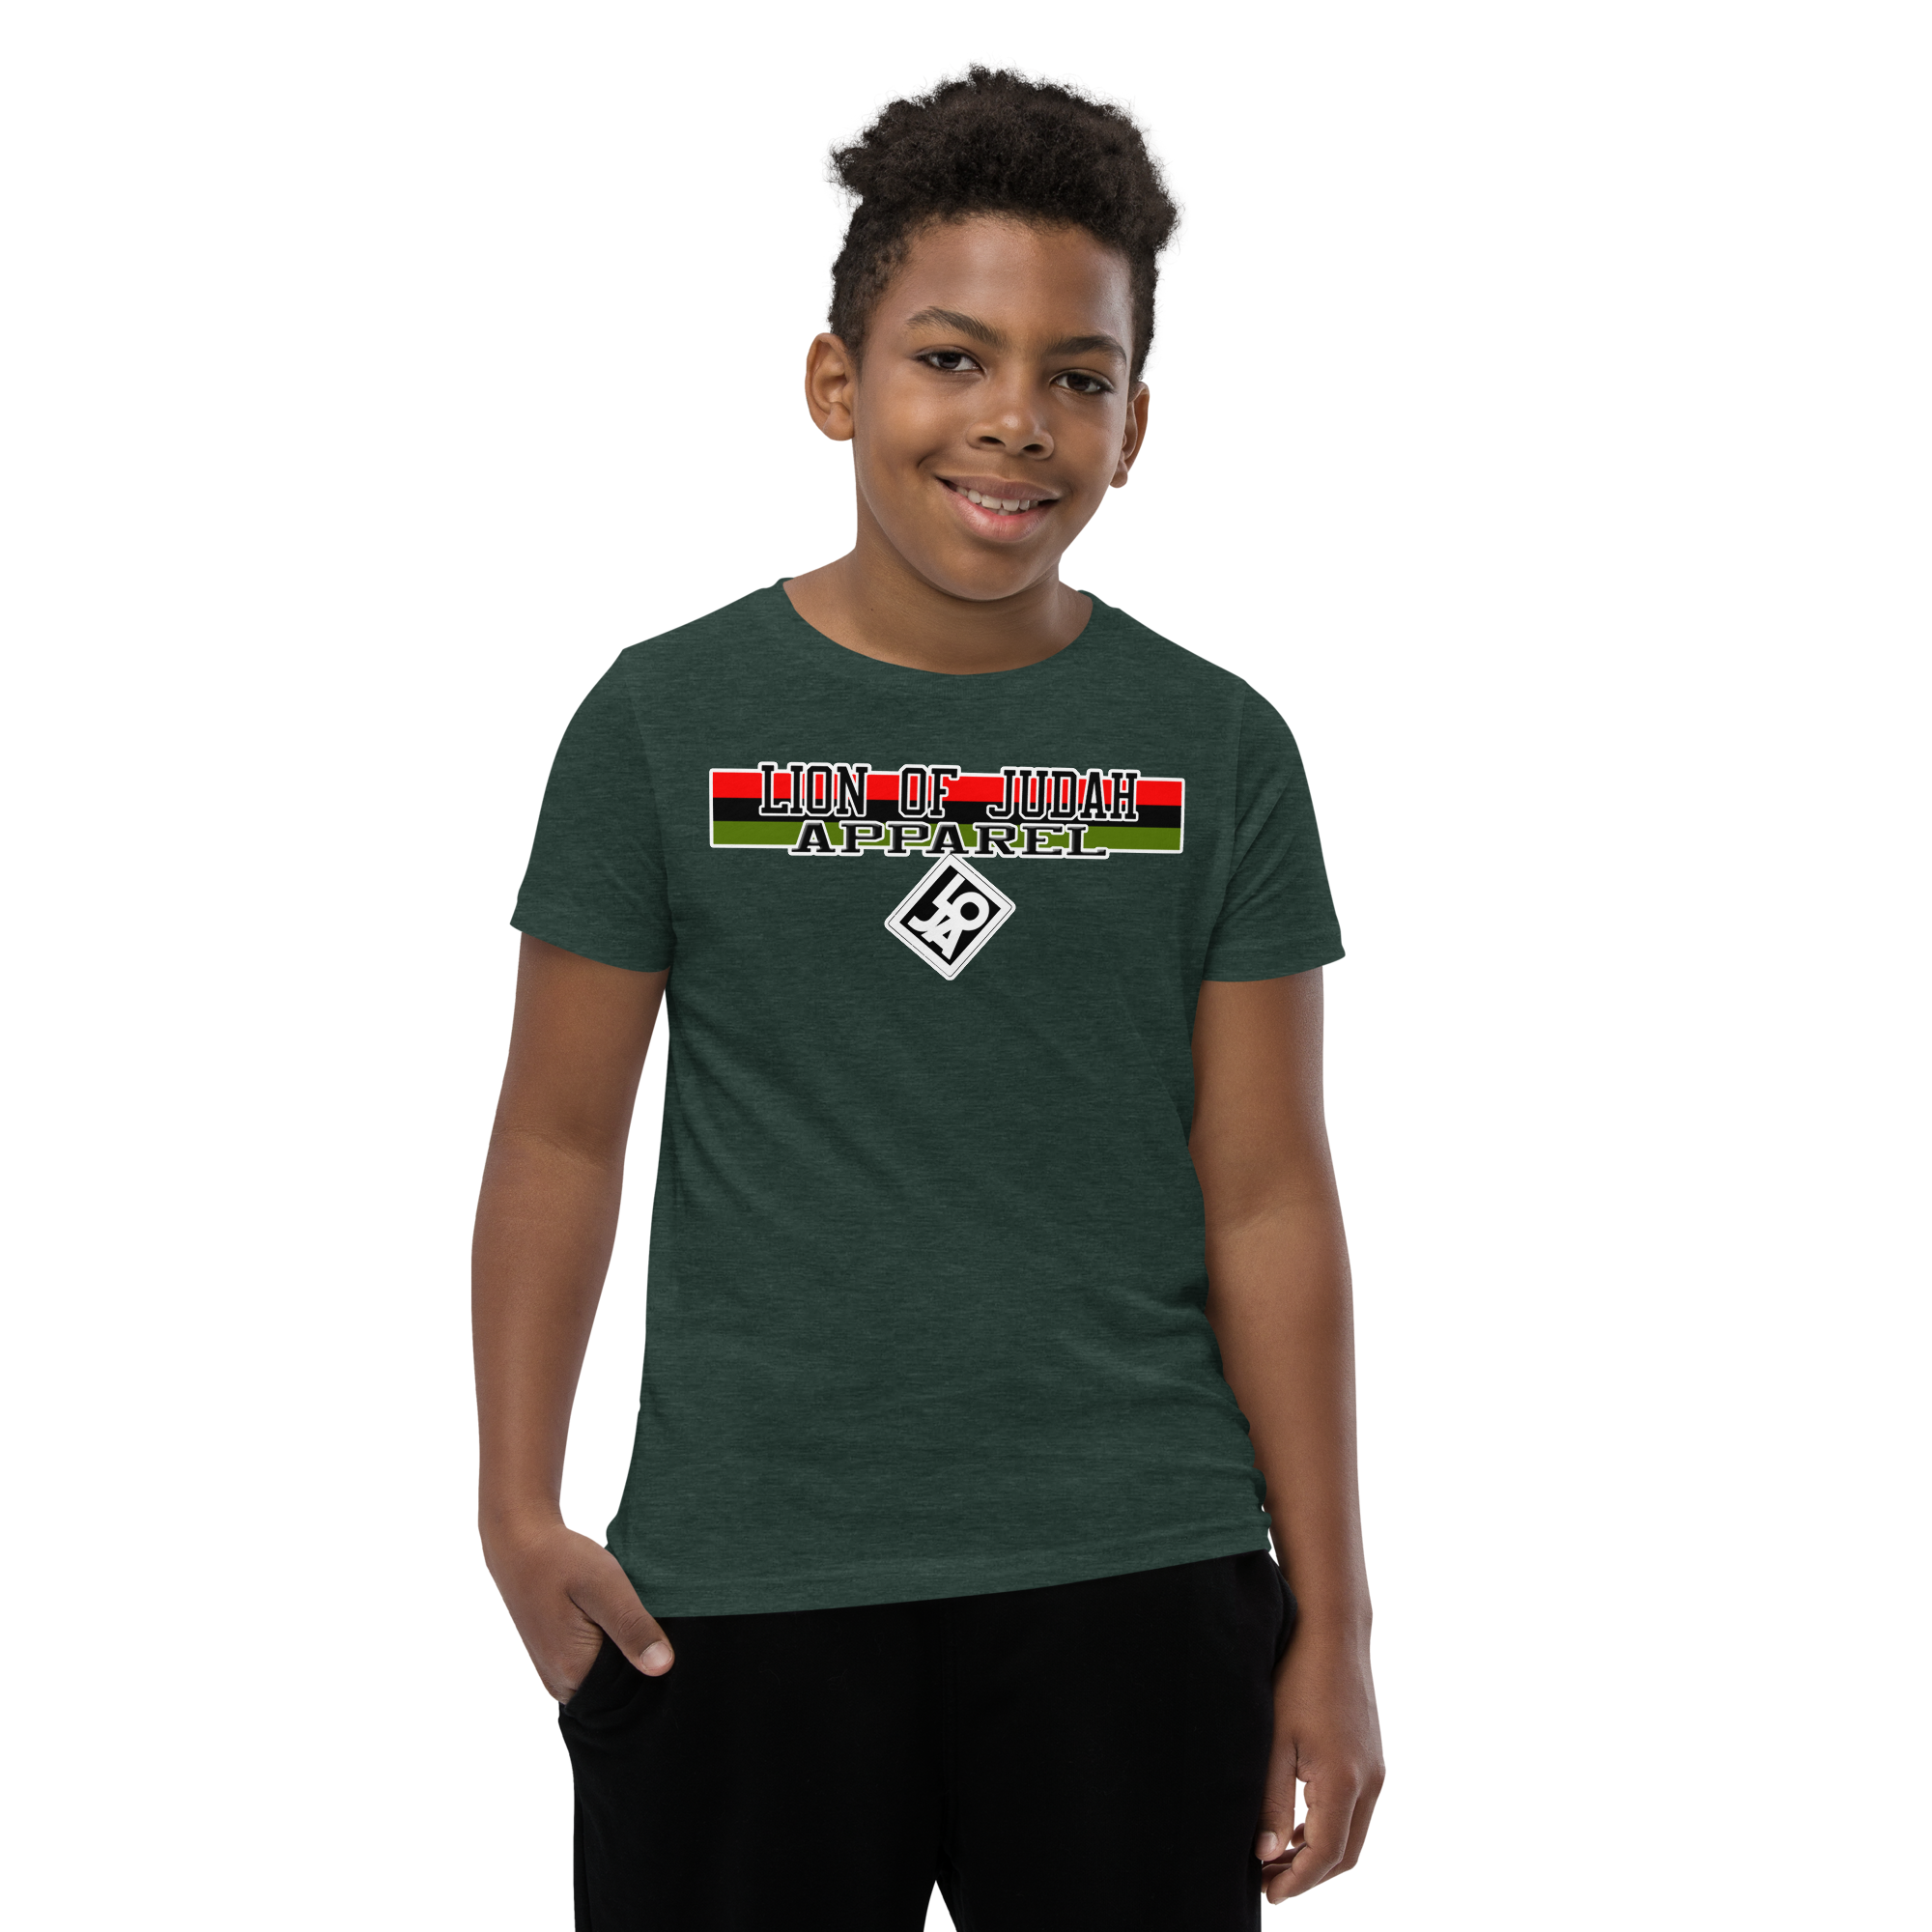 LOJA Branding Tag Youth Short Sleeve T-Shirt